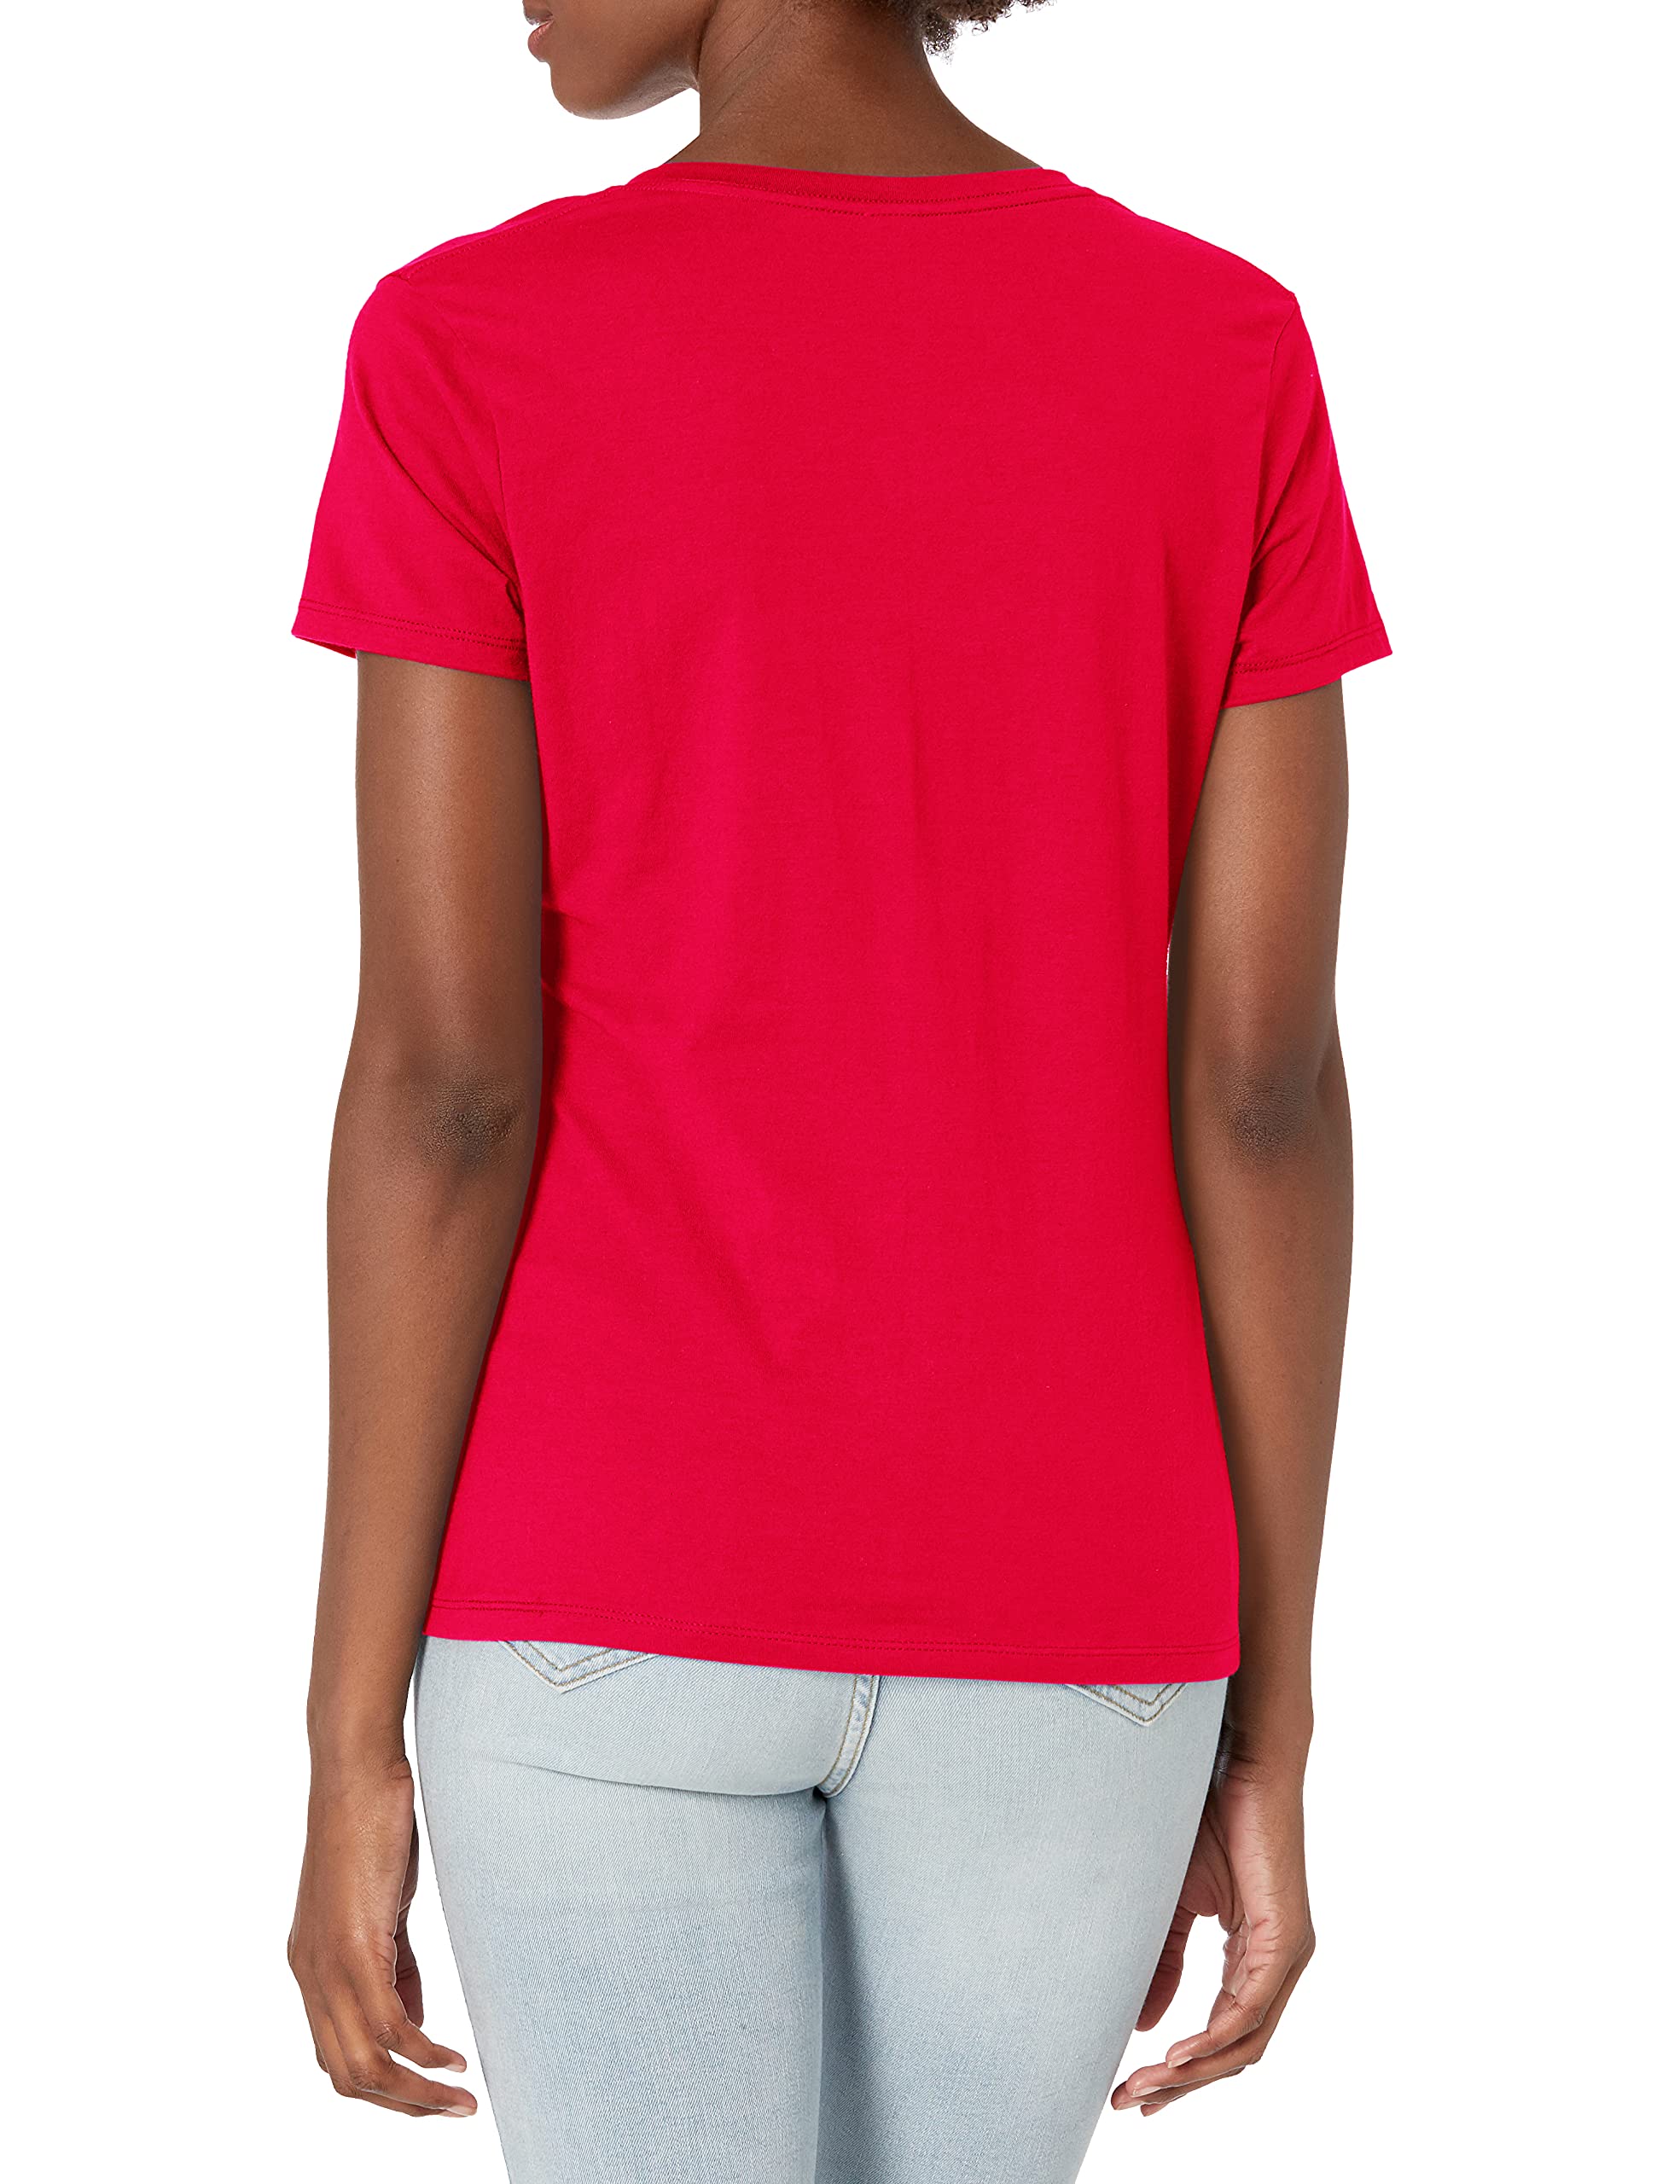 Hanes Women's X-Temp V-Neck T-Shirt